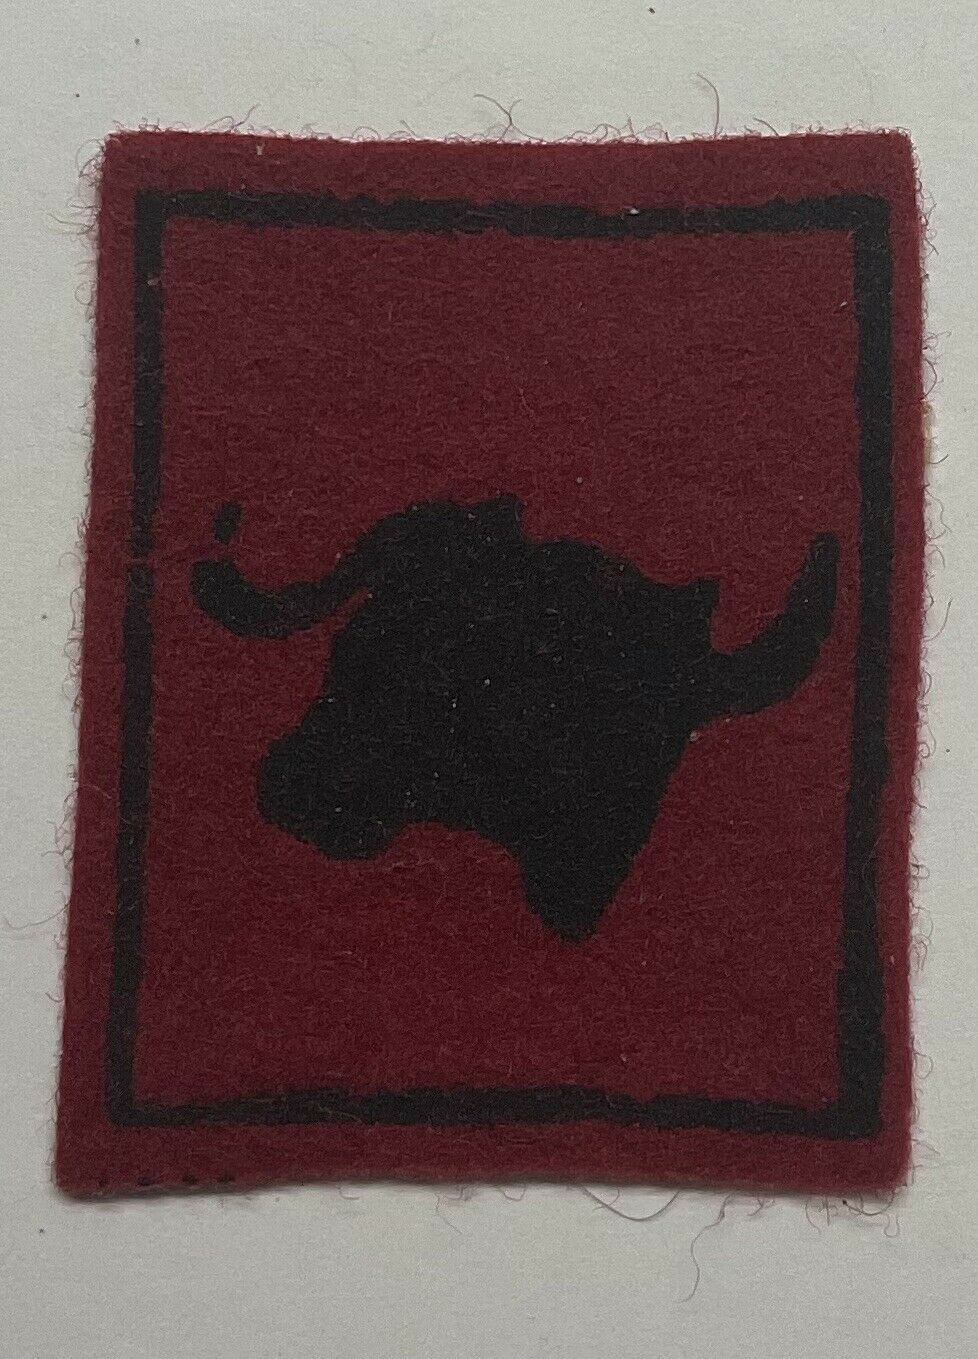 Boy Scout Water Buffalo Square Felt Patrol Patch (14-65)